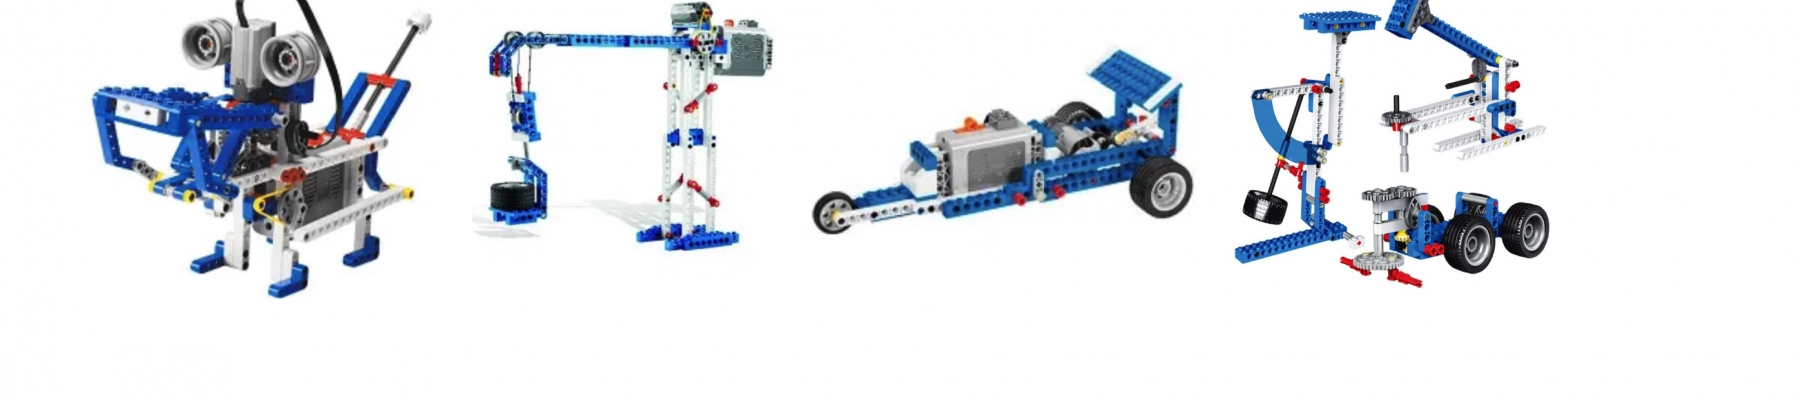 LEGO MACHINES BOUWEN   (29 SEPTEMBER)